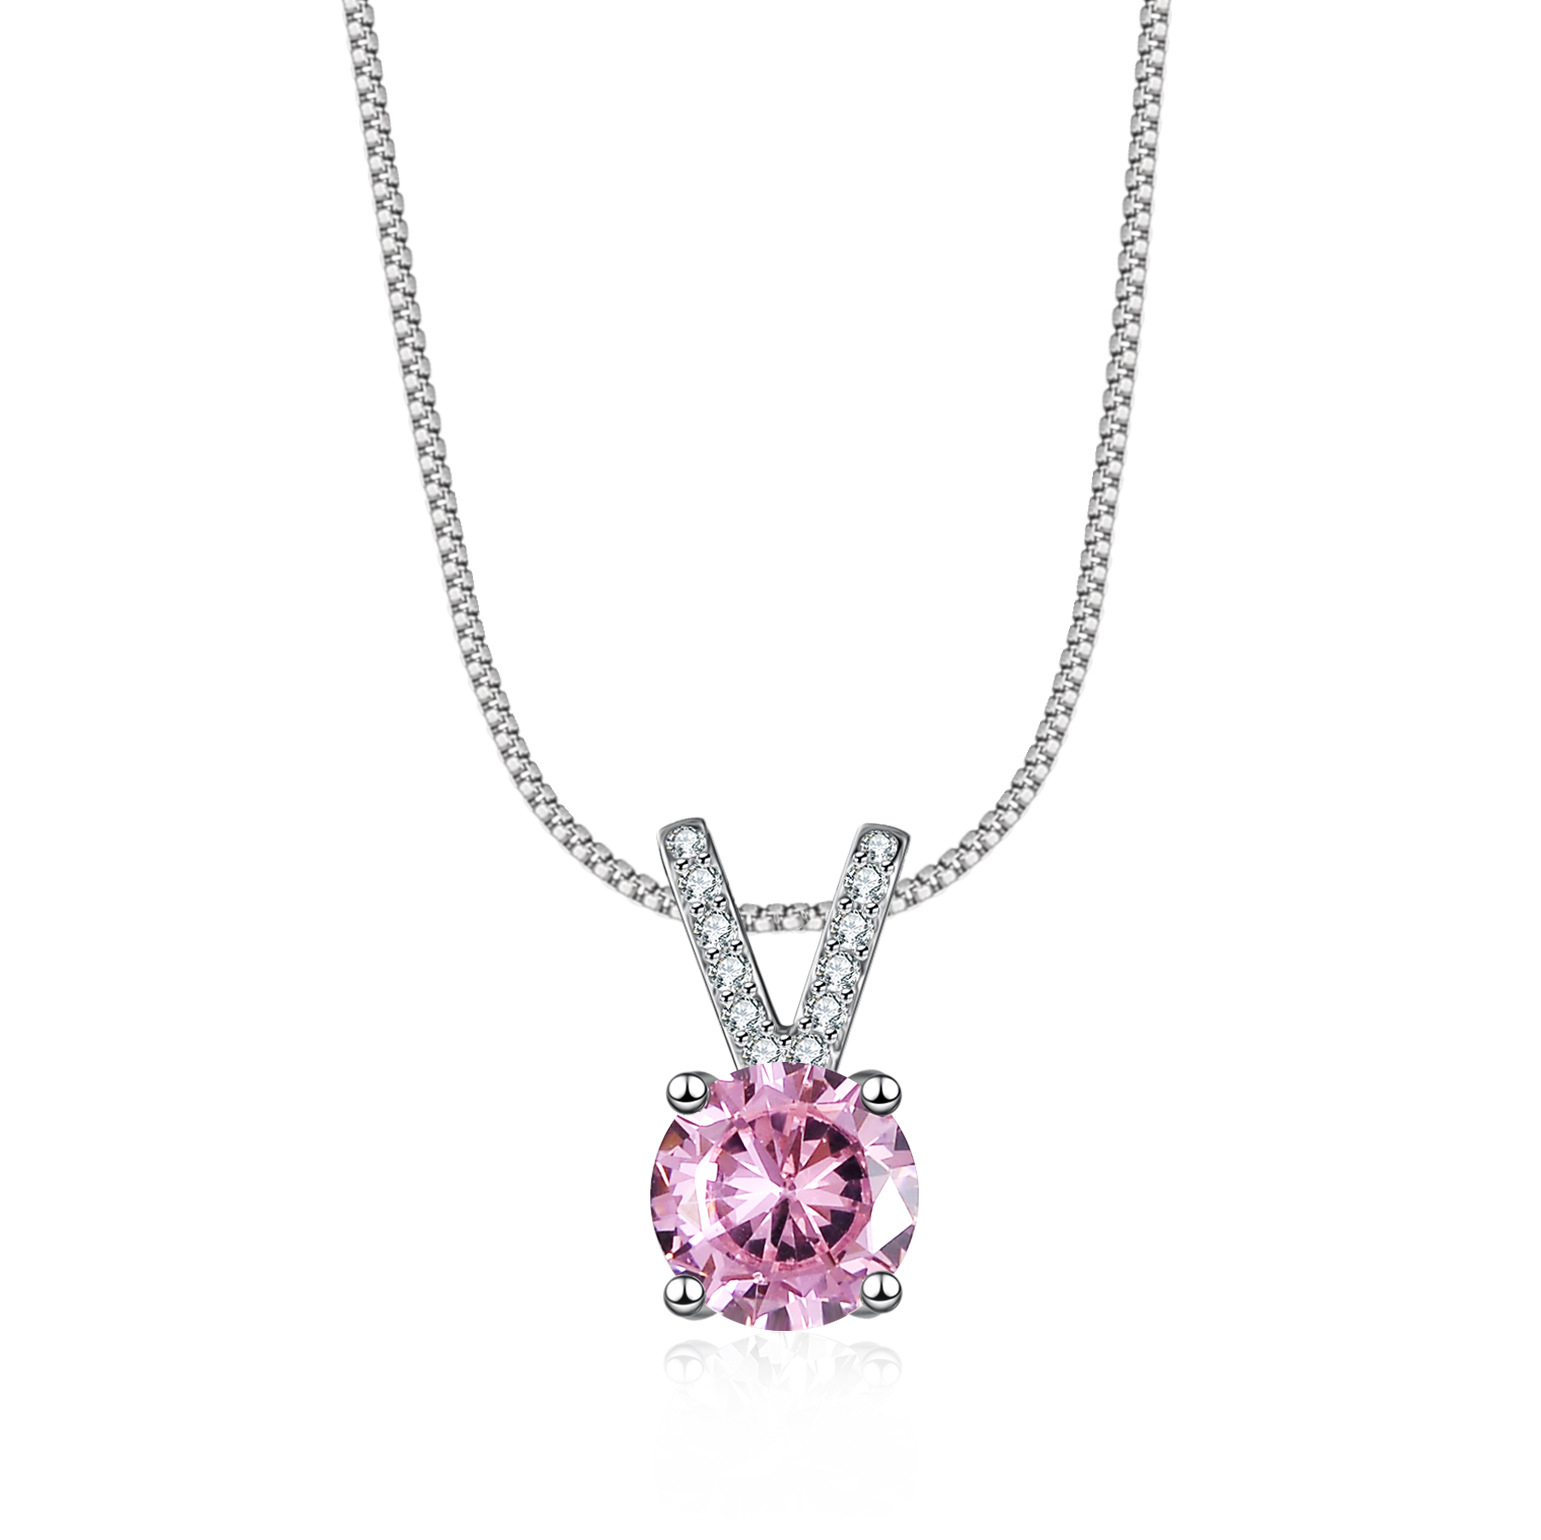 Cz Pink Colored Gem Sterling Silver Pendant Necklace